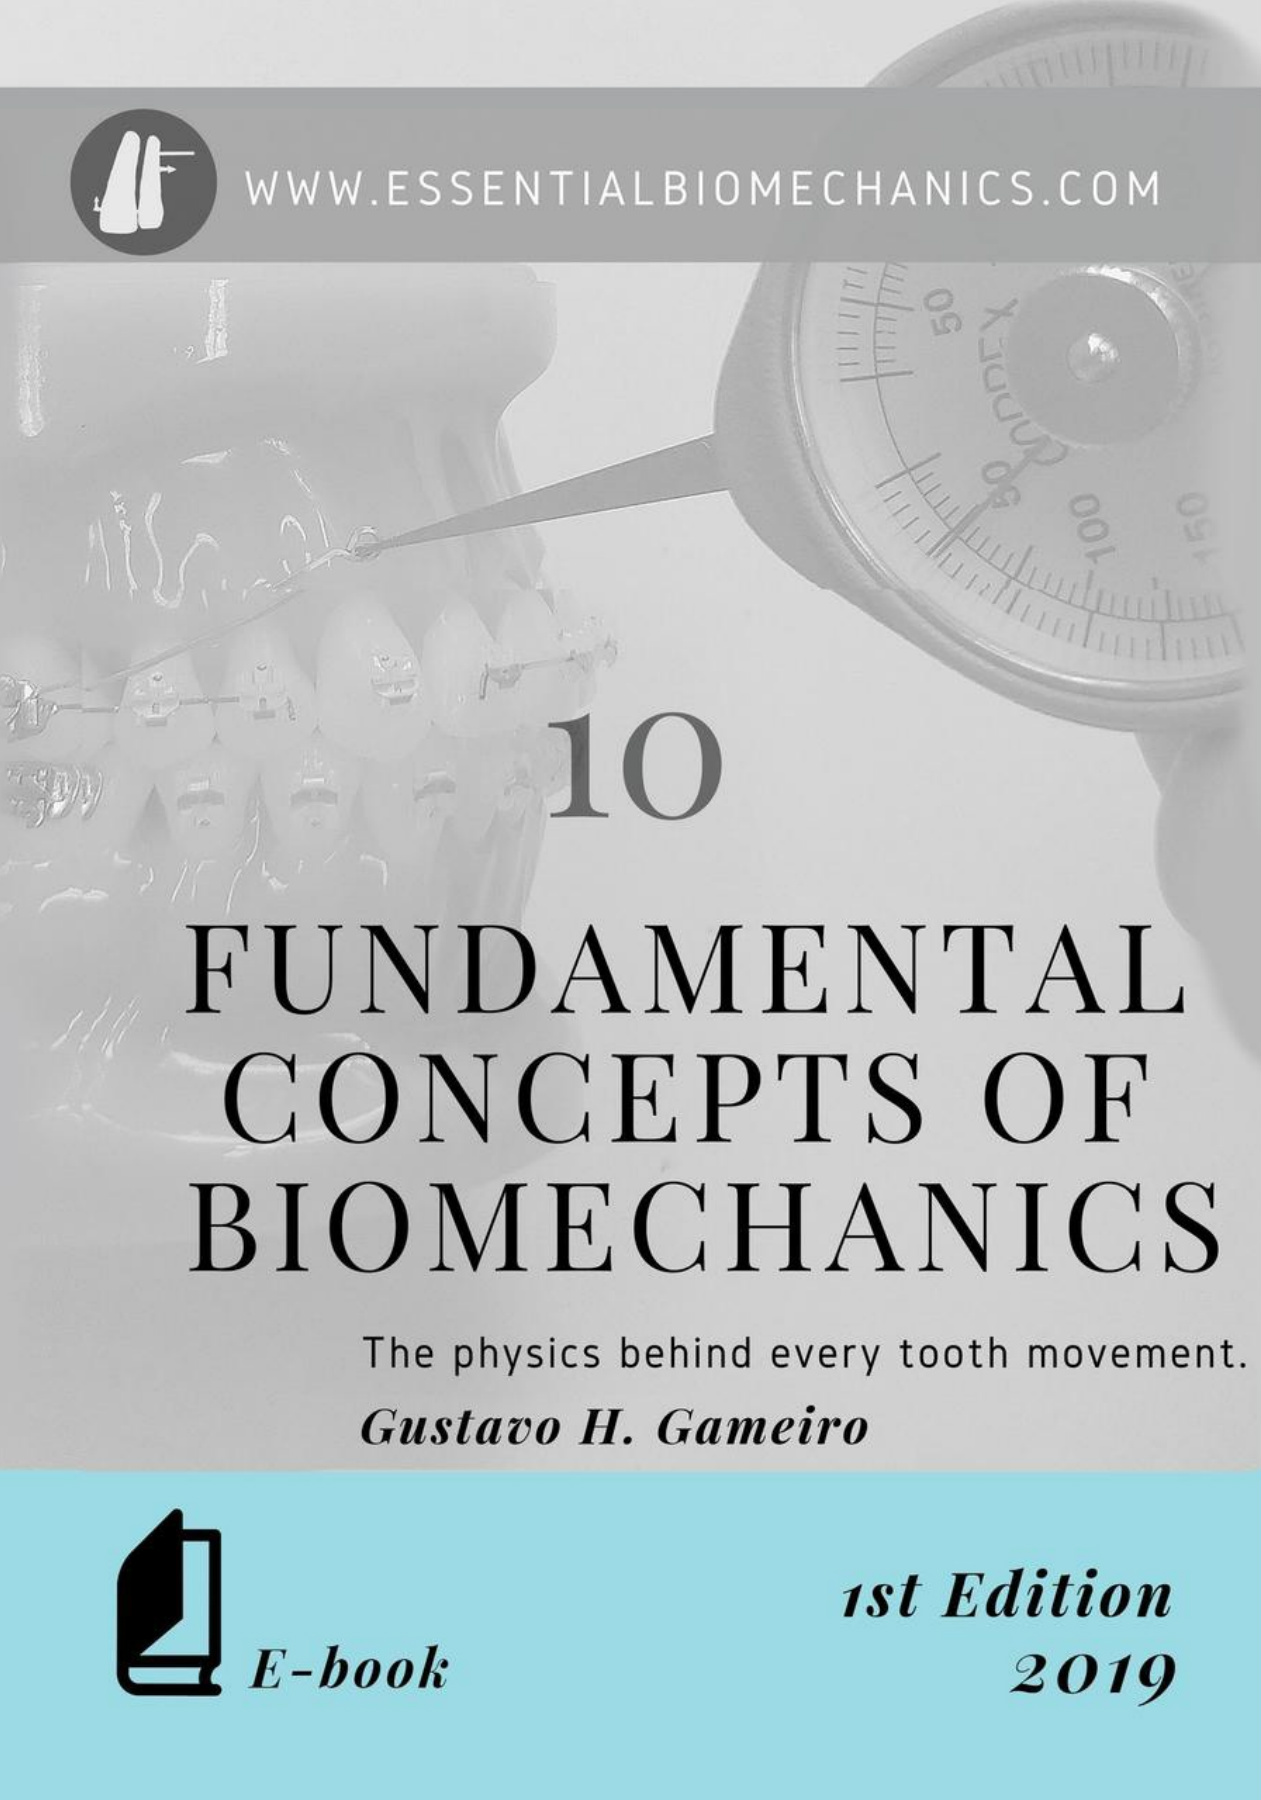 pdfcoffee.com_10-fundamental-concepts-of-biomechanics-gustavo-gameiropdf-pdf-free  - Flip PDF